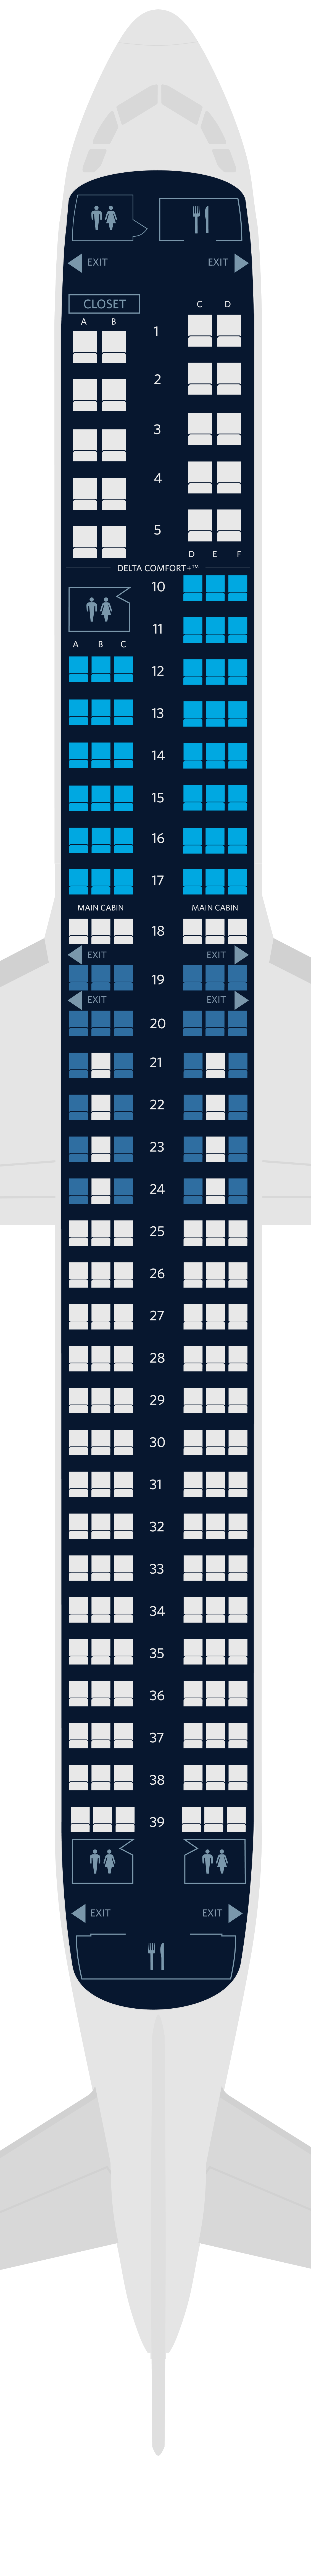 Mapa de assentos do Airbus A321neo